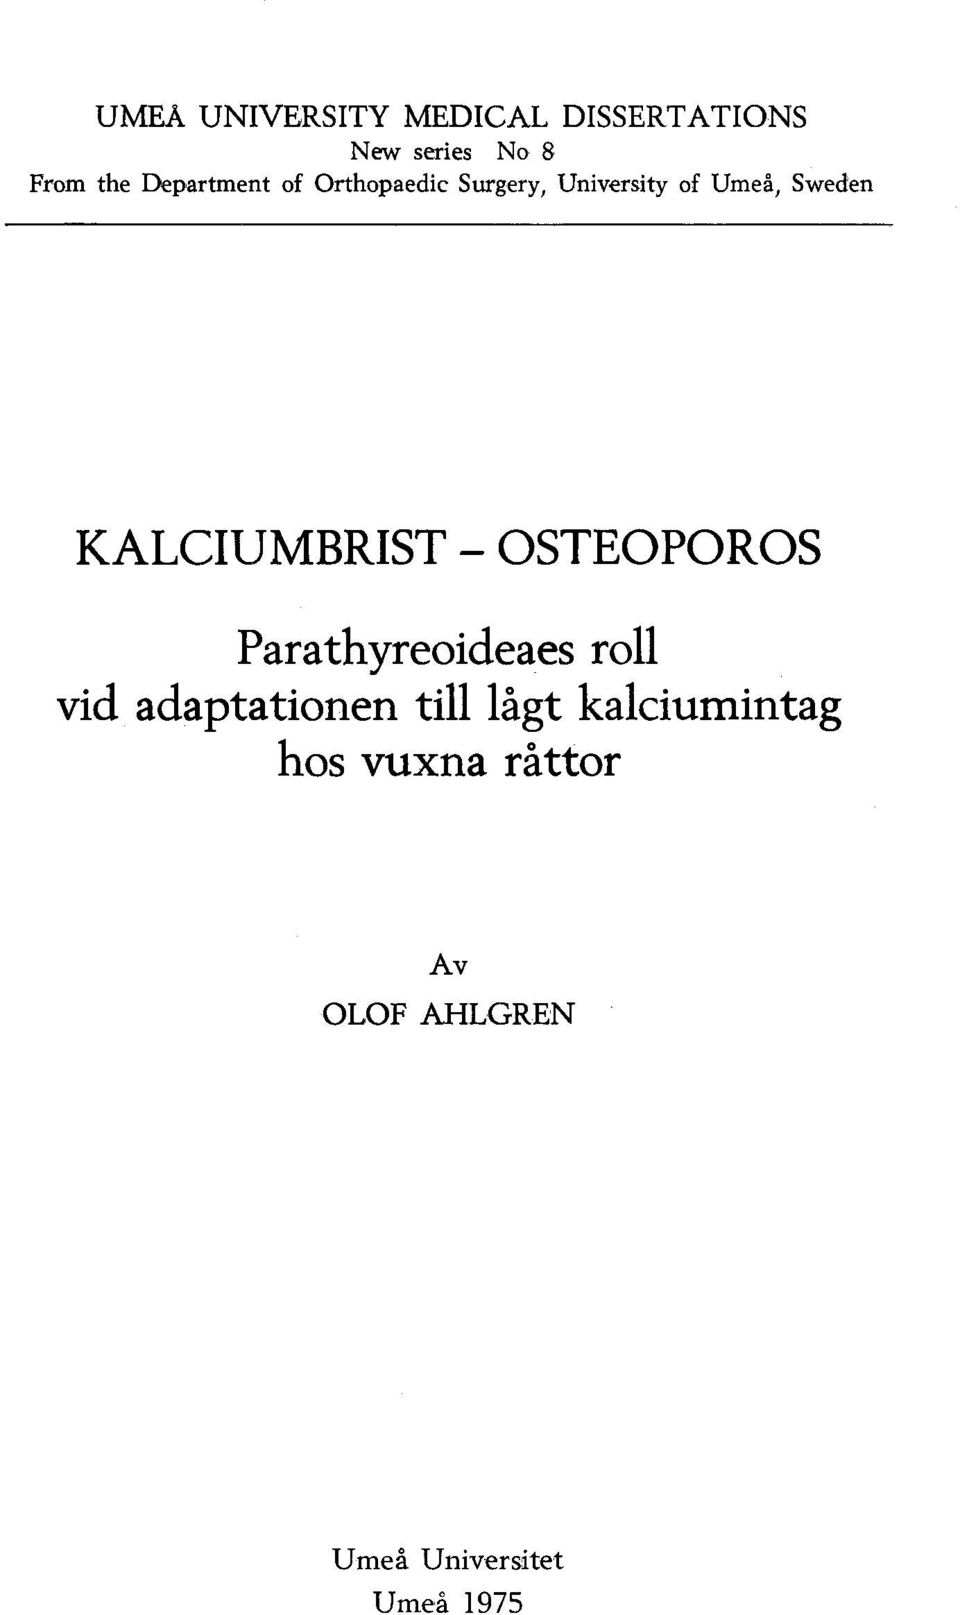 KALCIUMBRIST - OSTEOPOROS Parathyreoideaes roll vid adaptationen